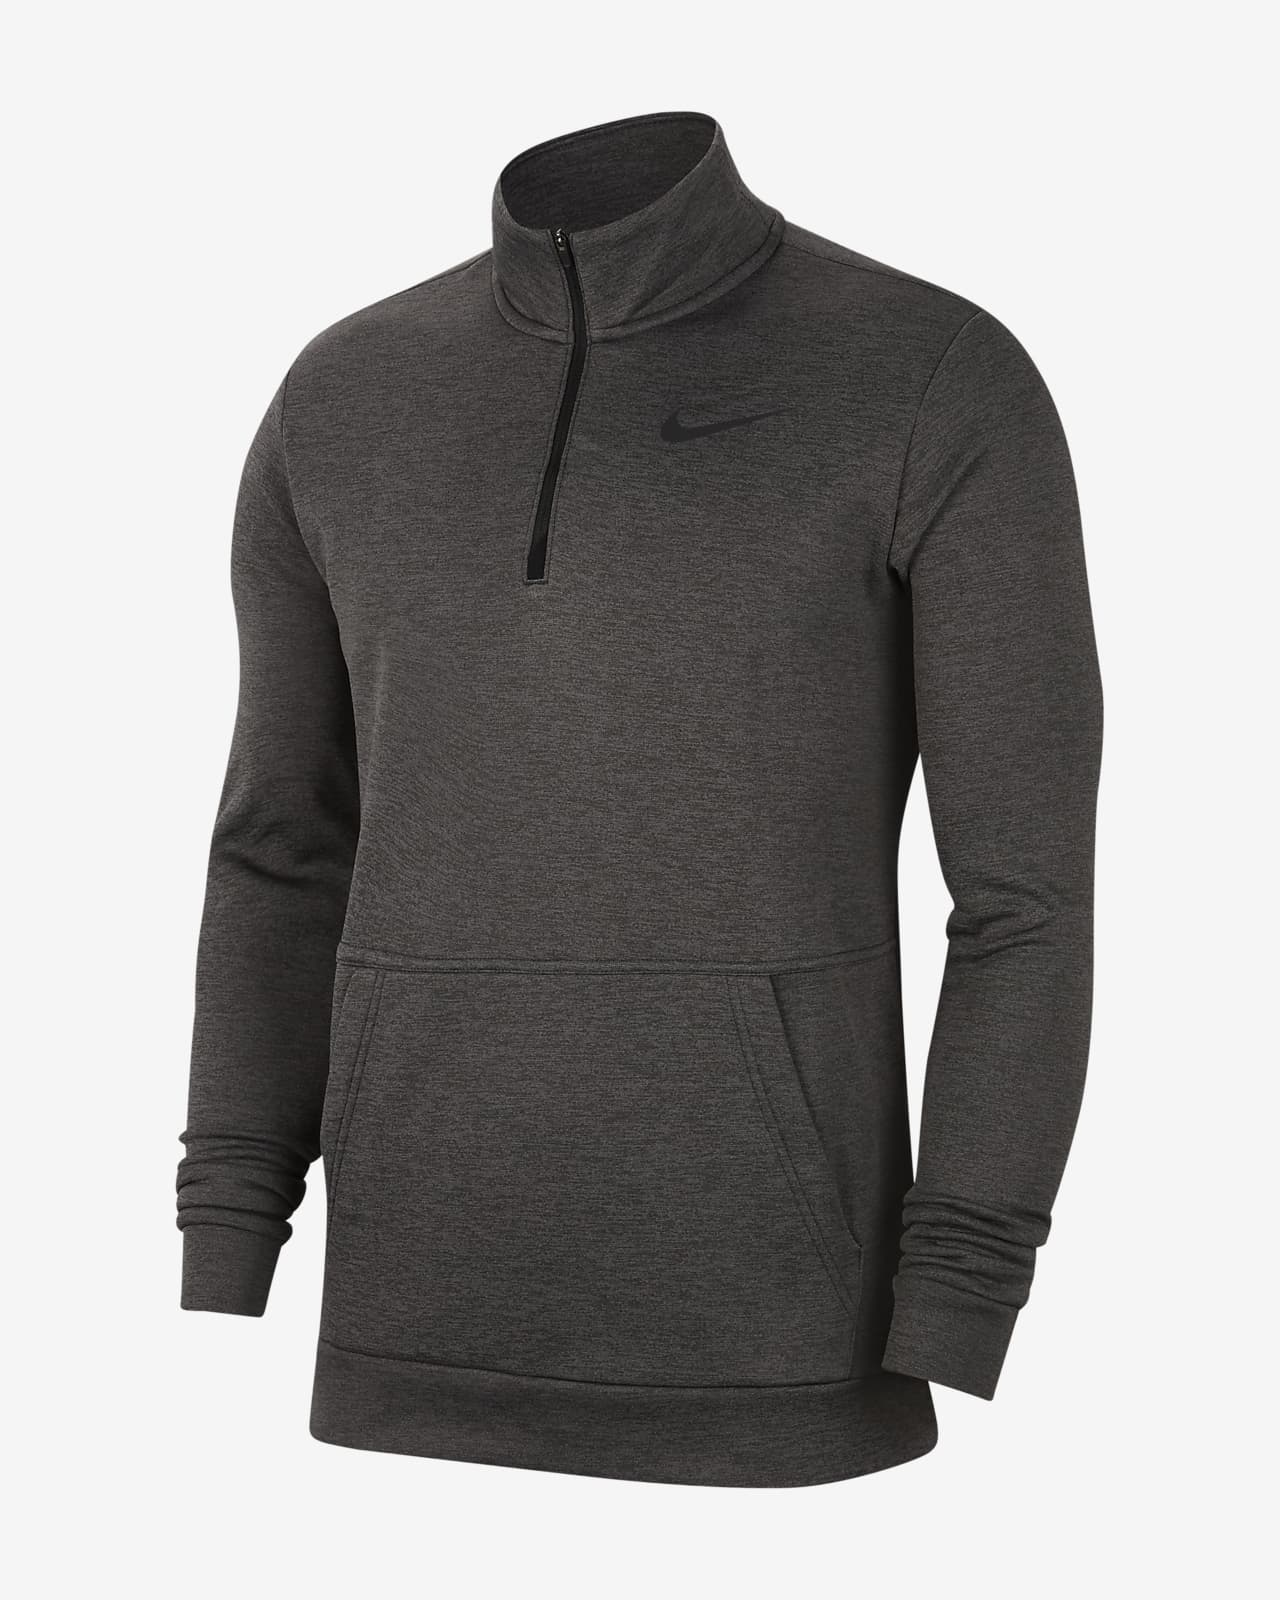 Nike Therma Men's Long-Sleeve 1/4-Zip Training Top